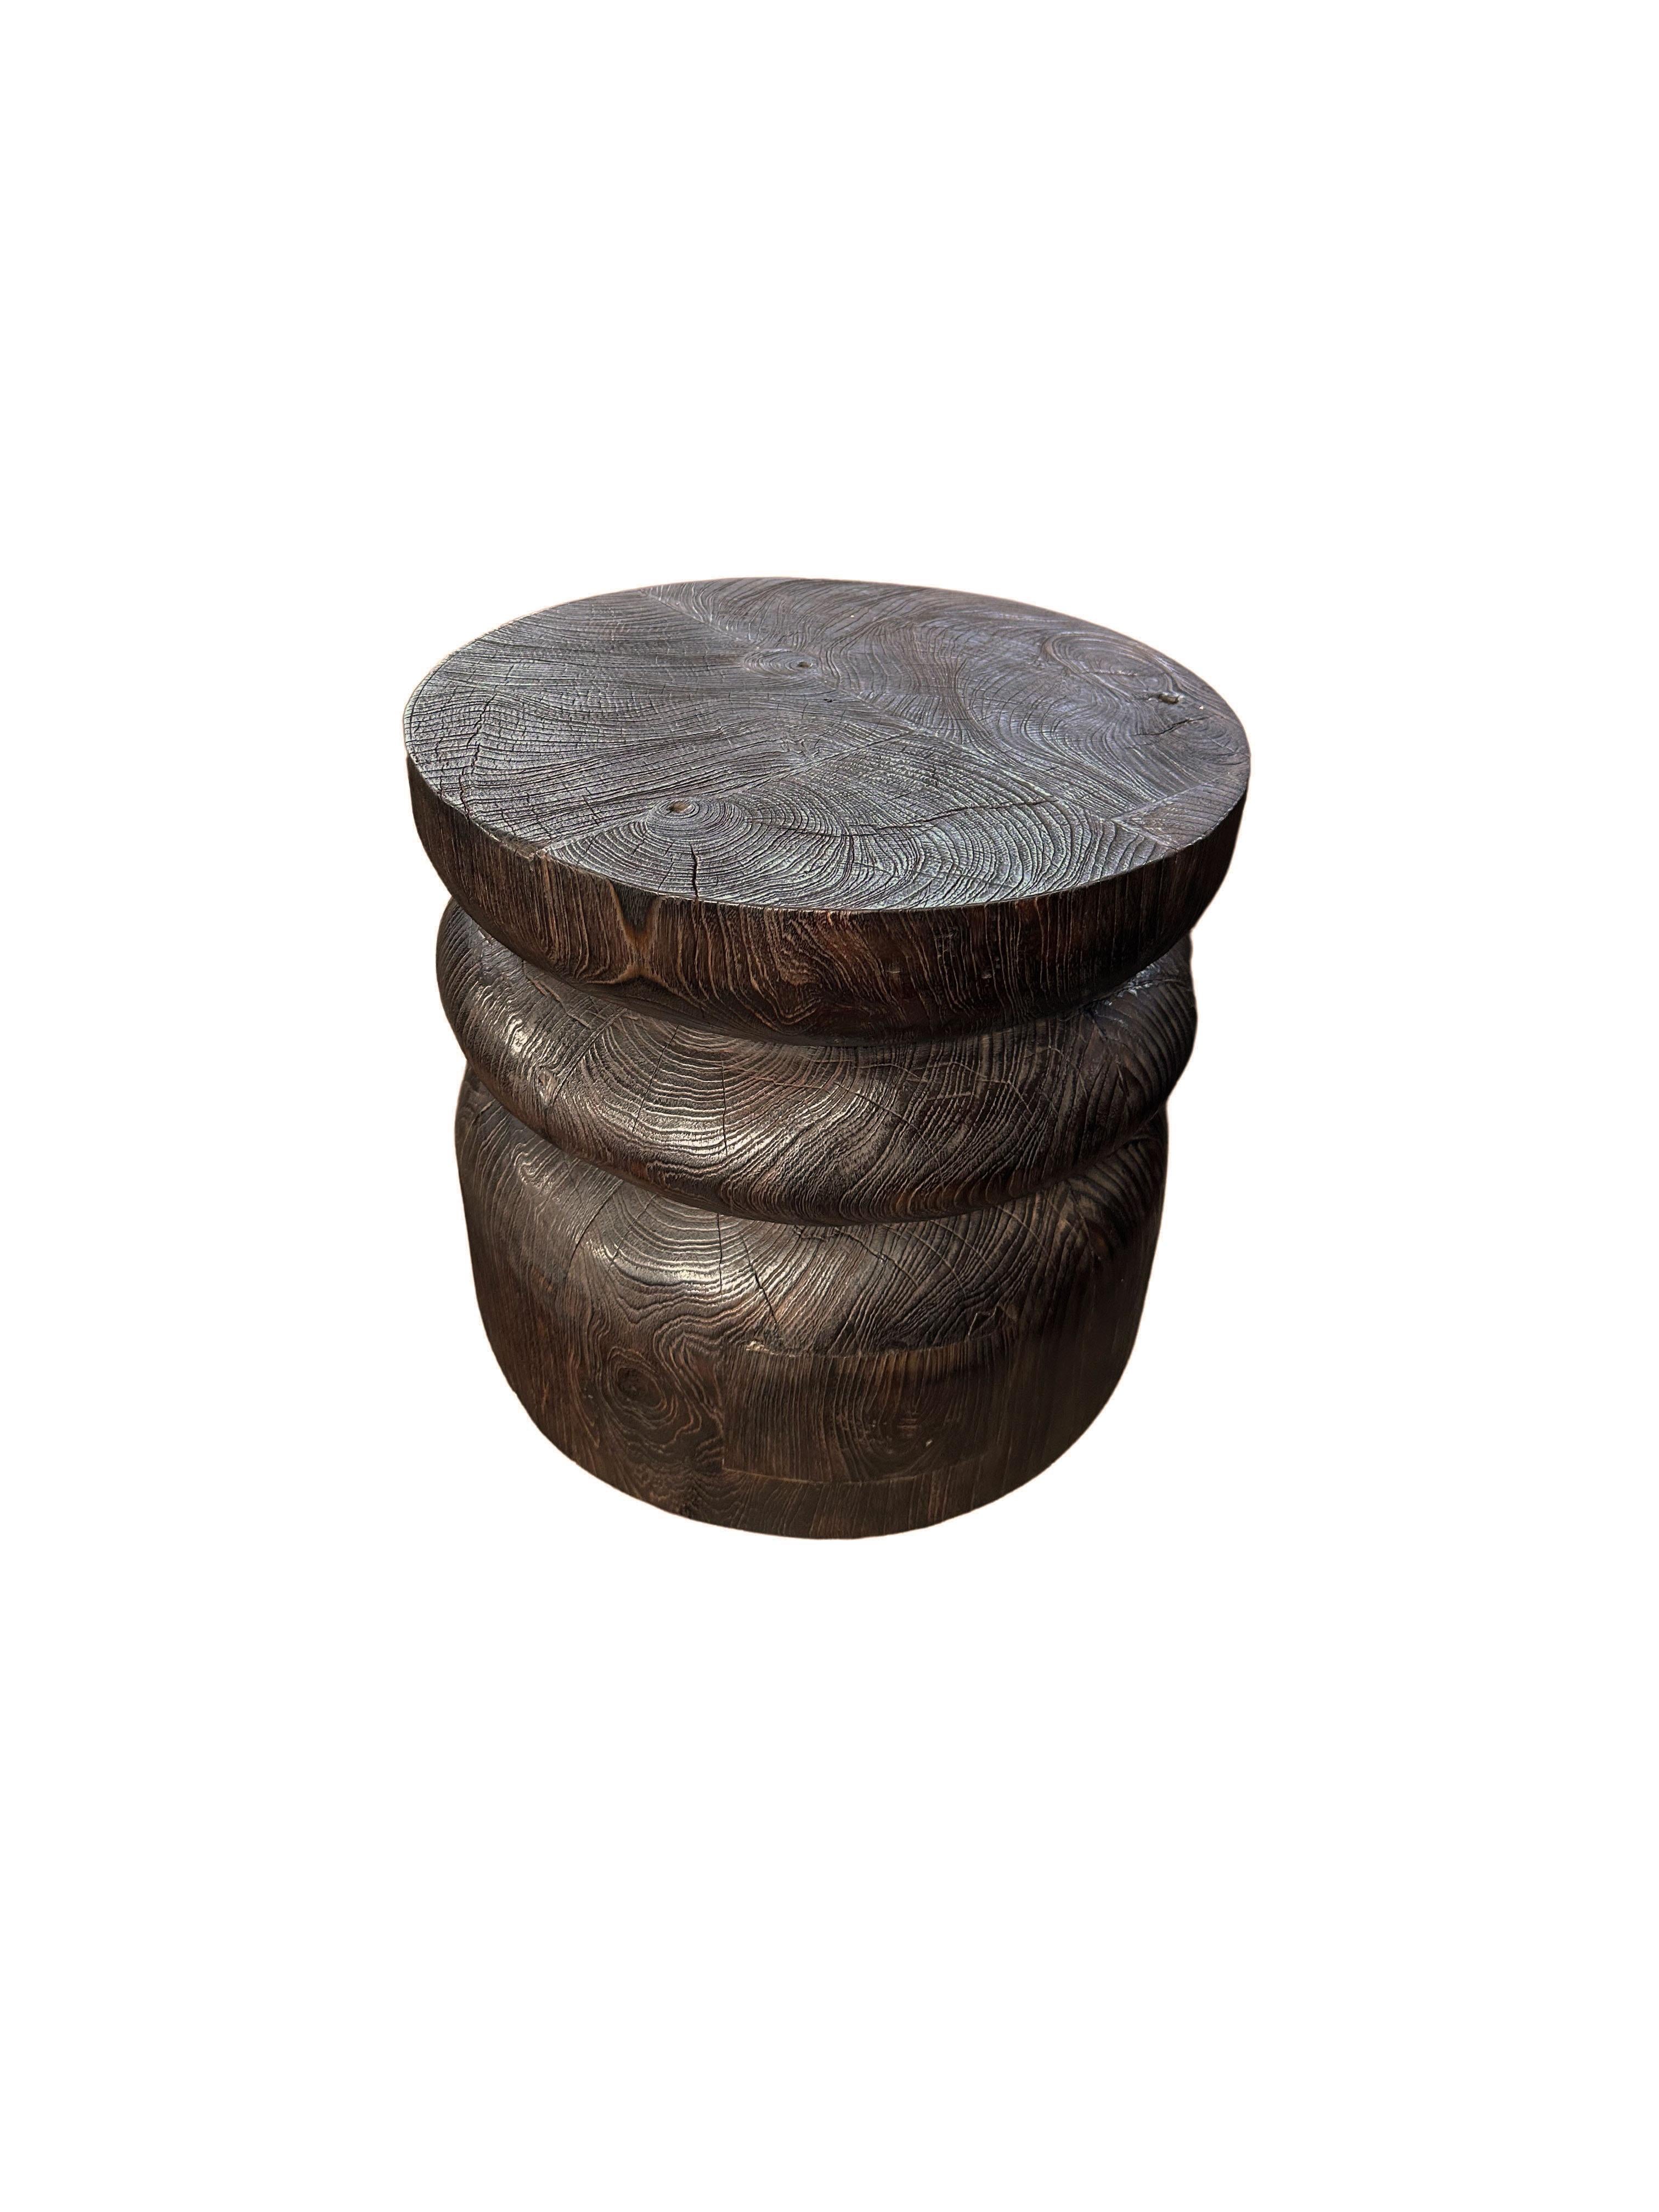 Indonesian Round Teak Wood Side Table, Burnt Finish, Layered Design, Modern Organic For Sale